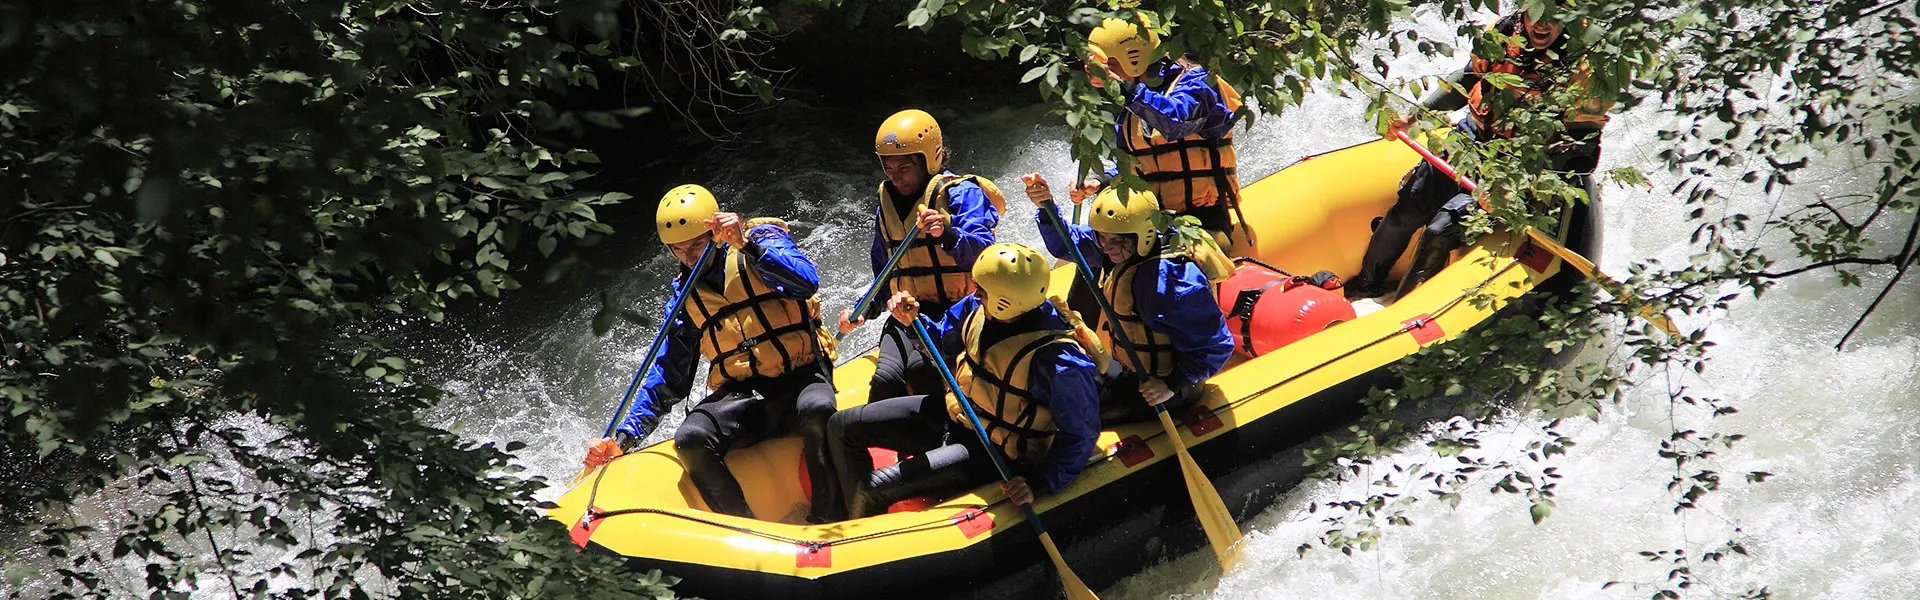 Rafting in Umbria per adulti e famiglie